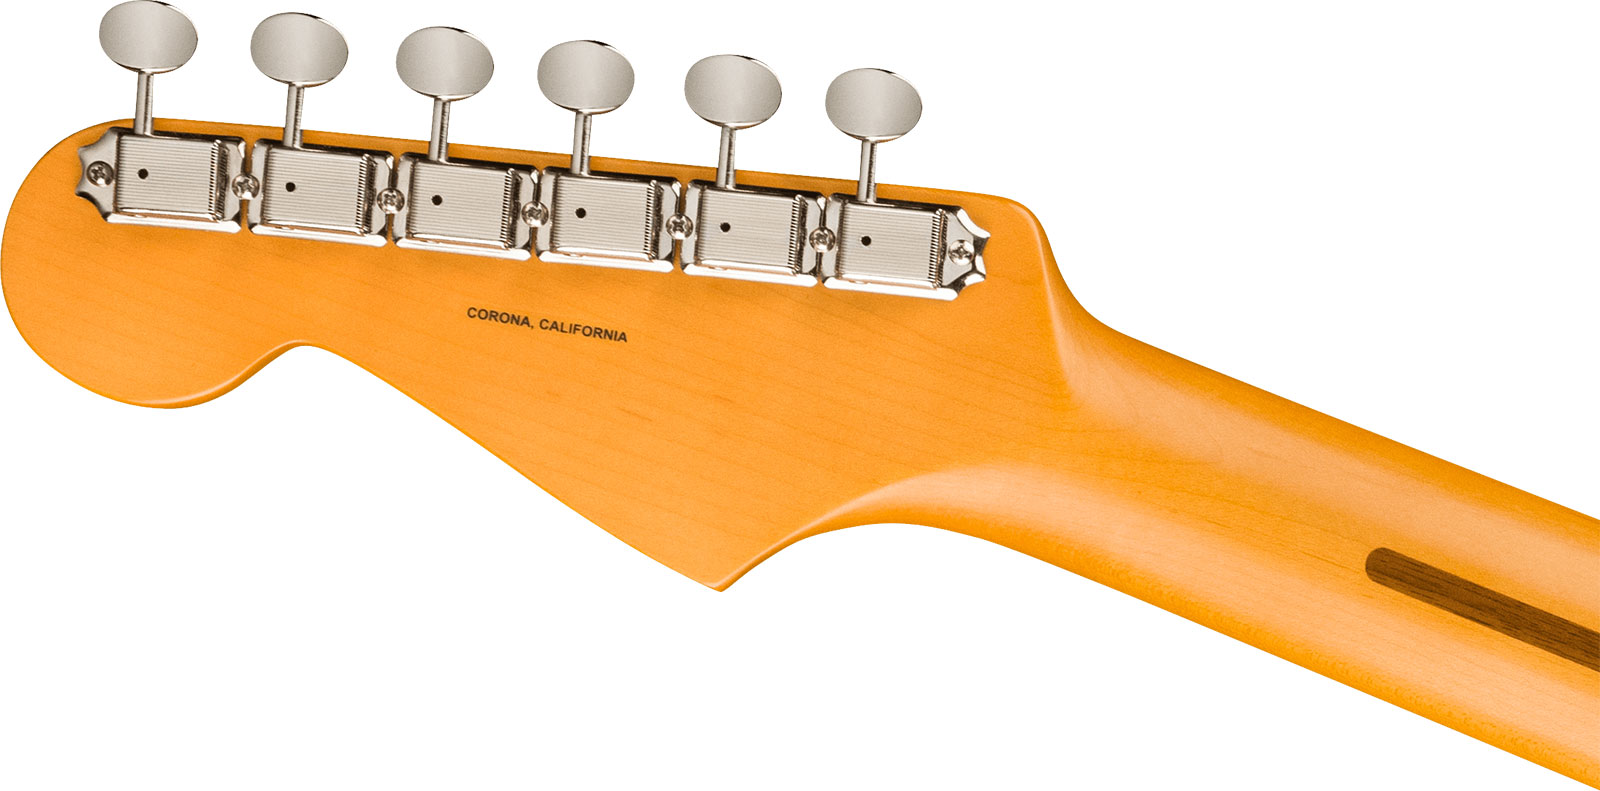 Fender Lincoln Brewster Strat Usa Signature 3s Dimarzio Trem Mn - Olympic Pearl - Guitarra electrica retro rock - Variation 3